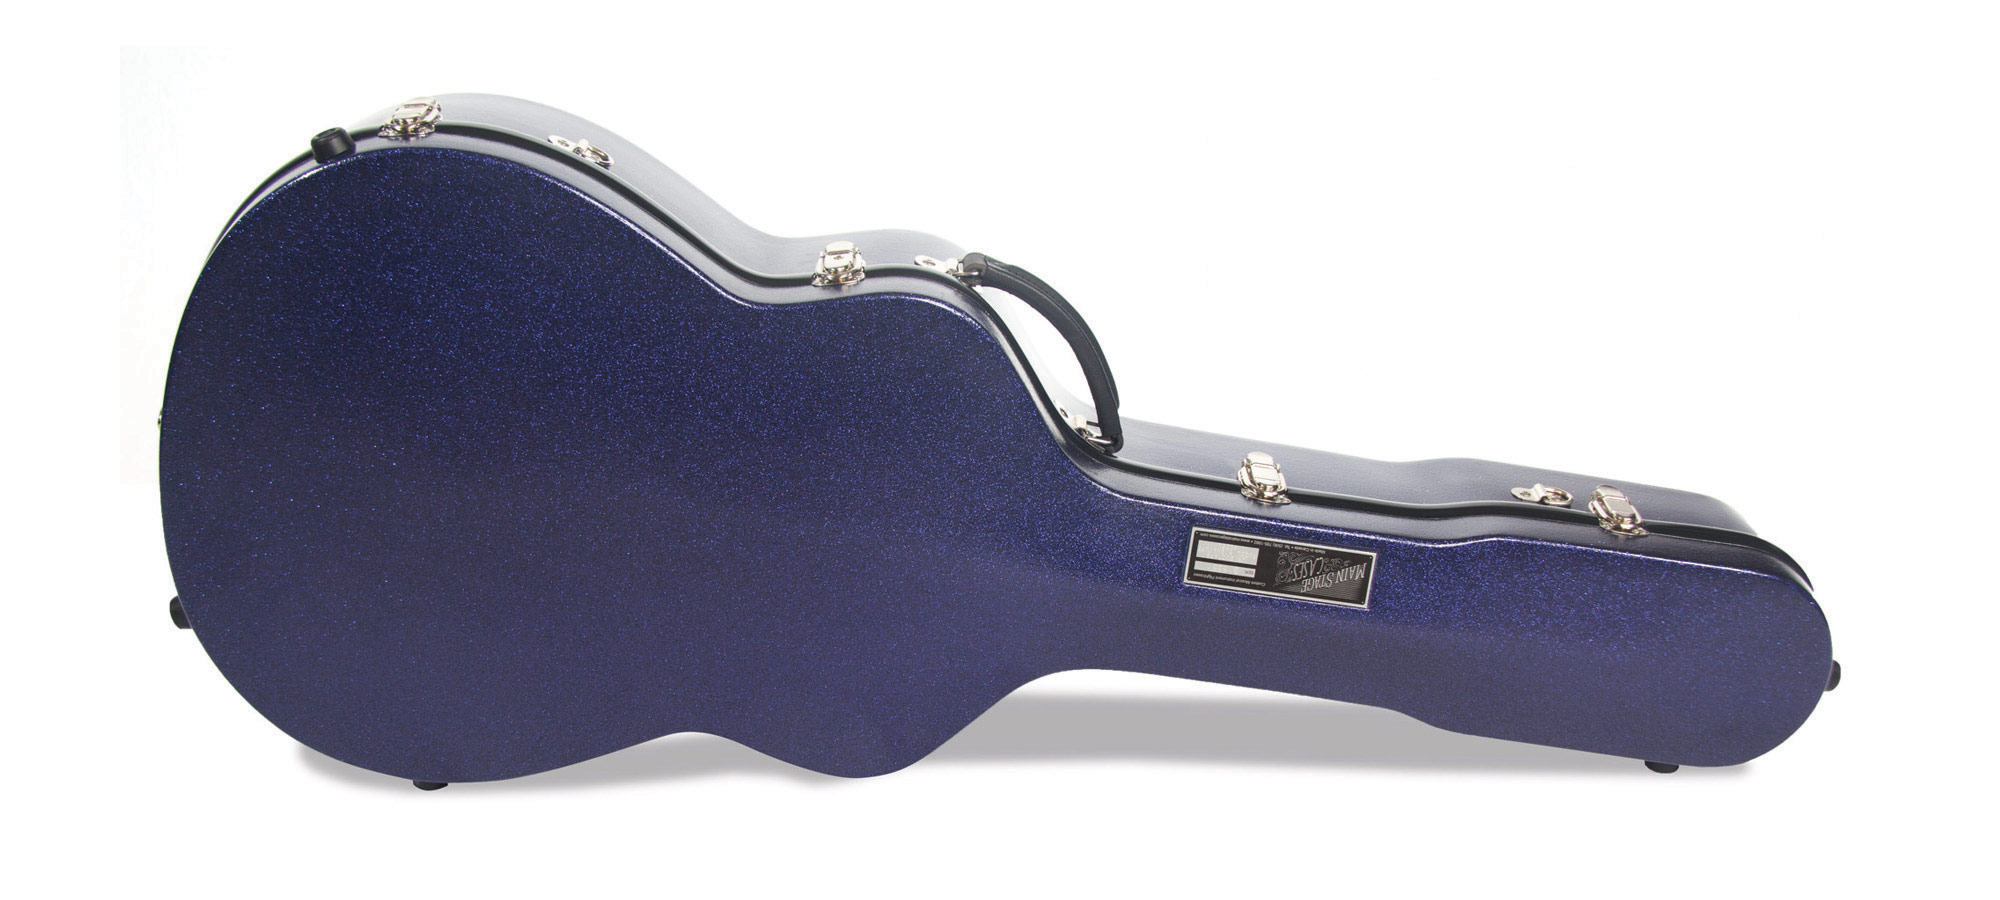 mainstage-guitar-purple